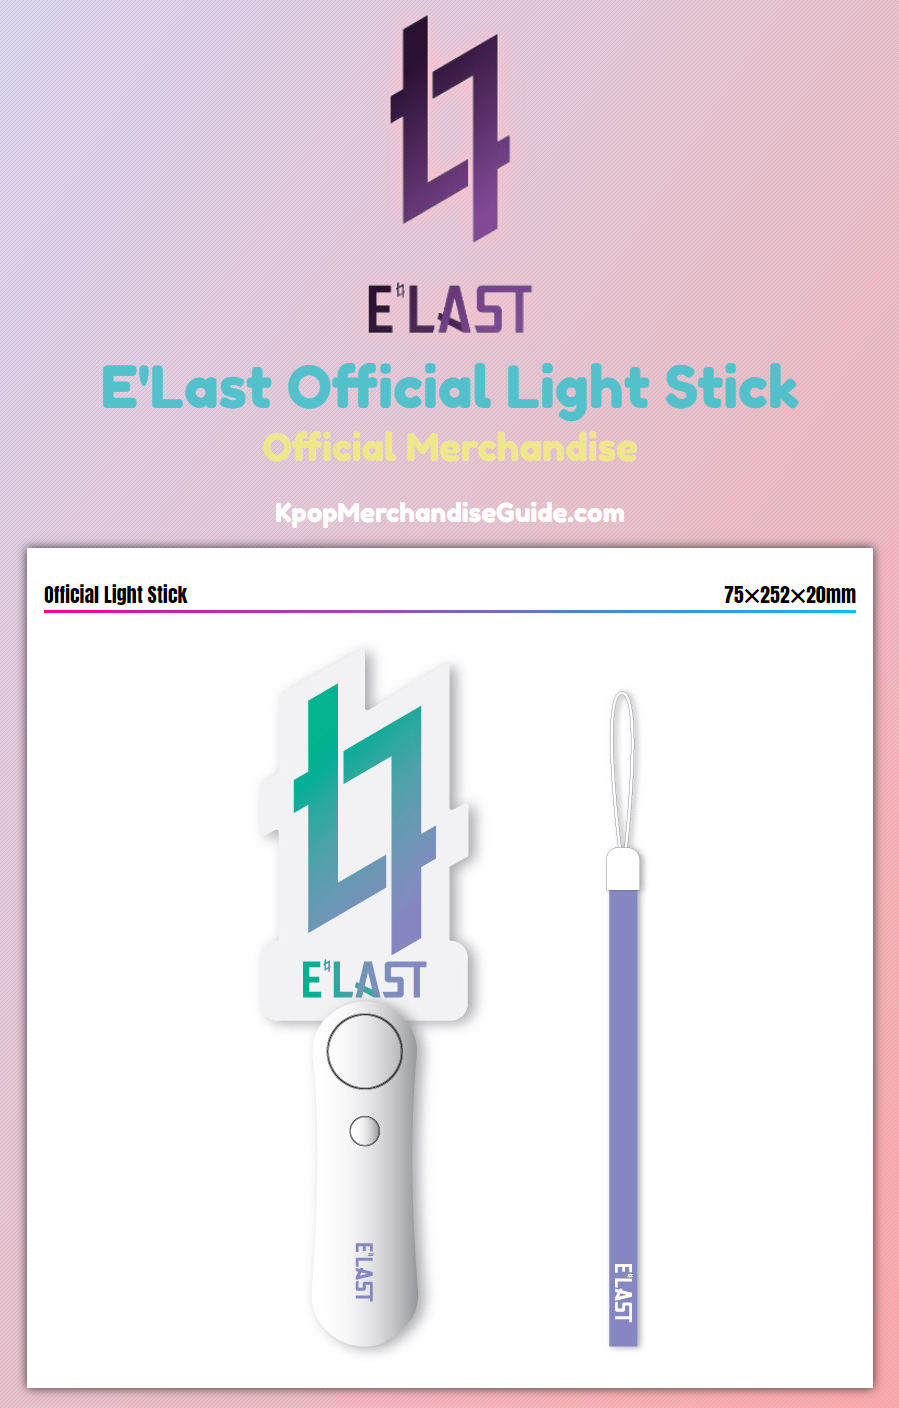 E'Last Official Light Stick